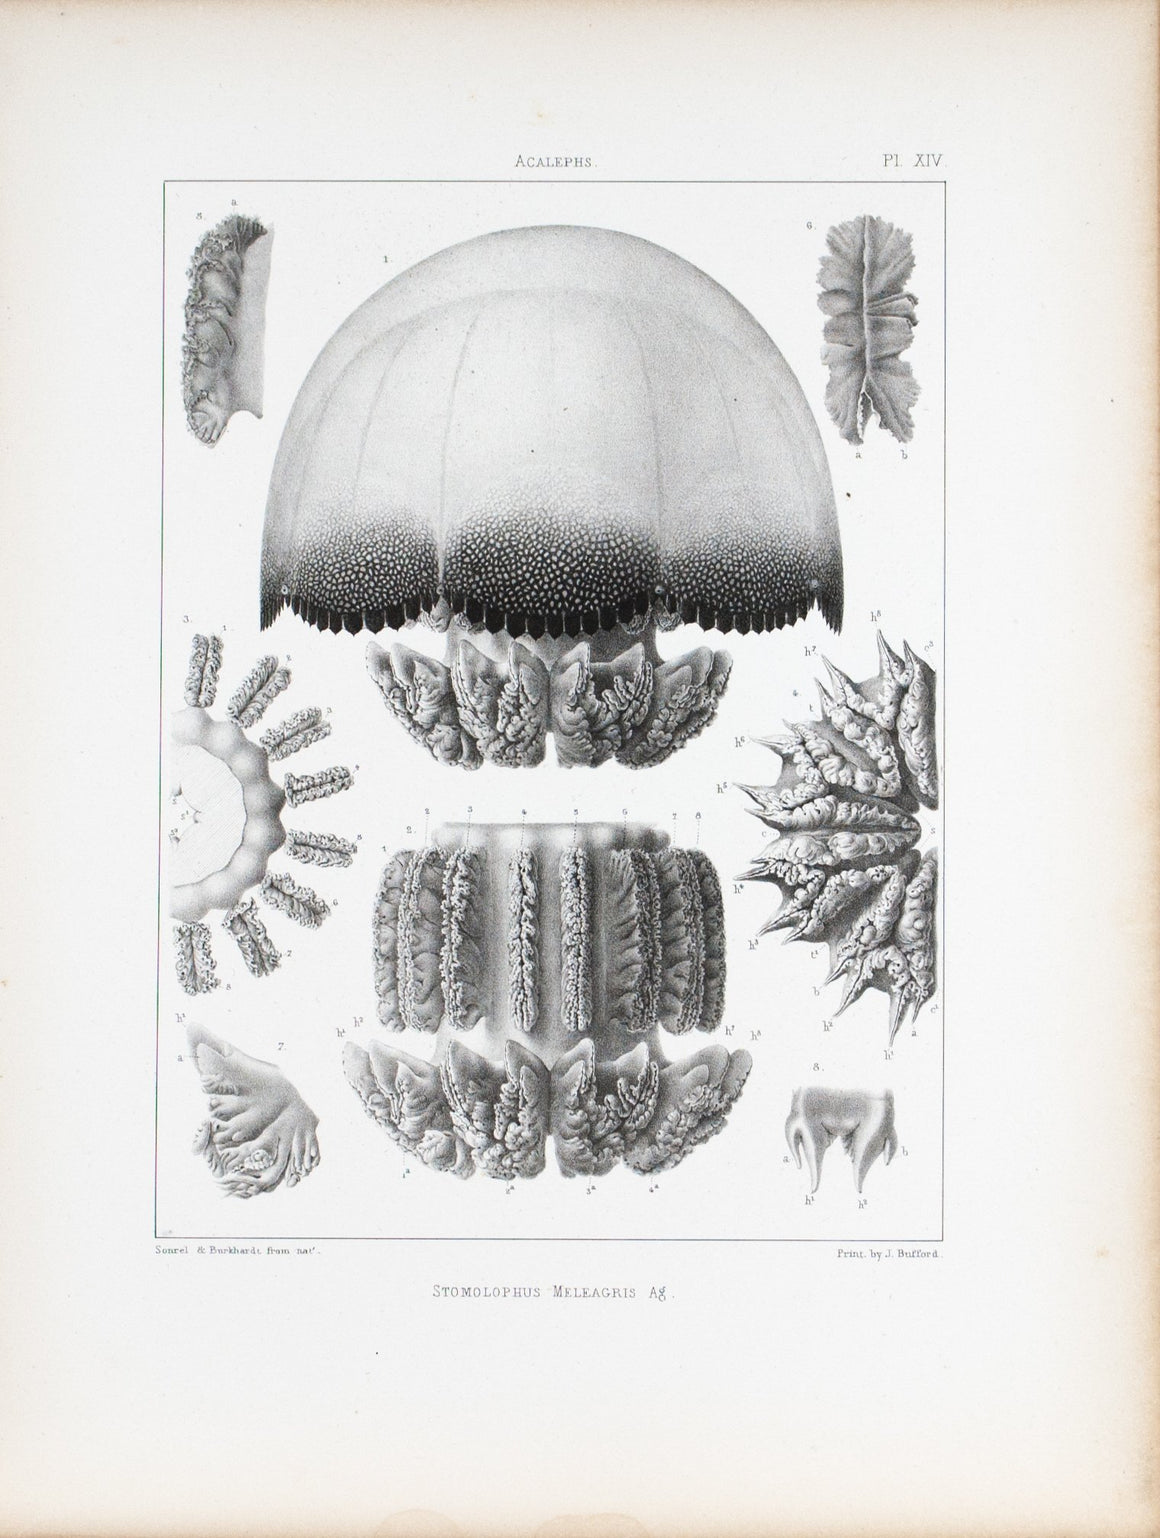 Stomolophus Meleagris Cross Section Jellyfish Antique 1860 Print Plate XIV